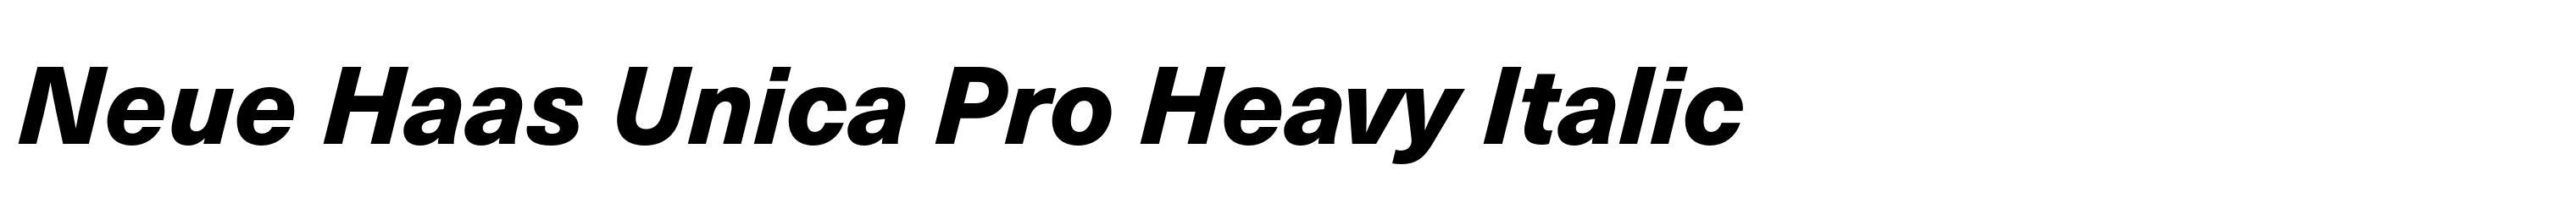 Neue Haas Unica Pro Heavy Italic